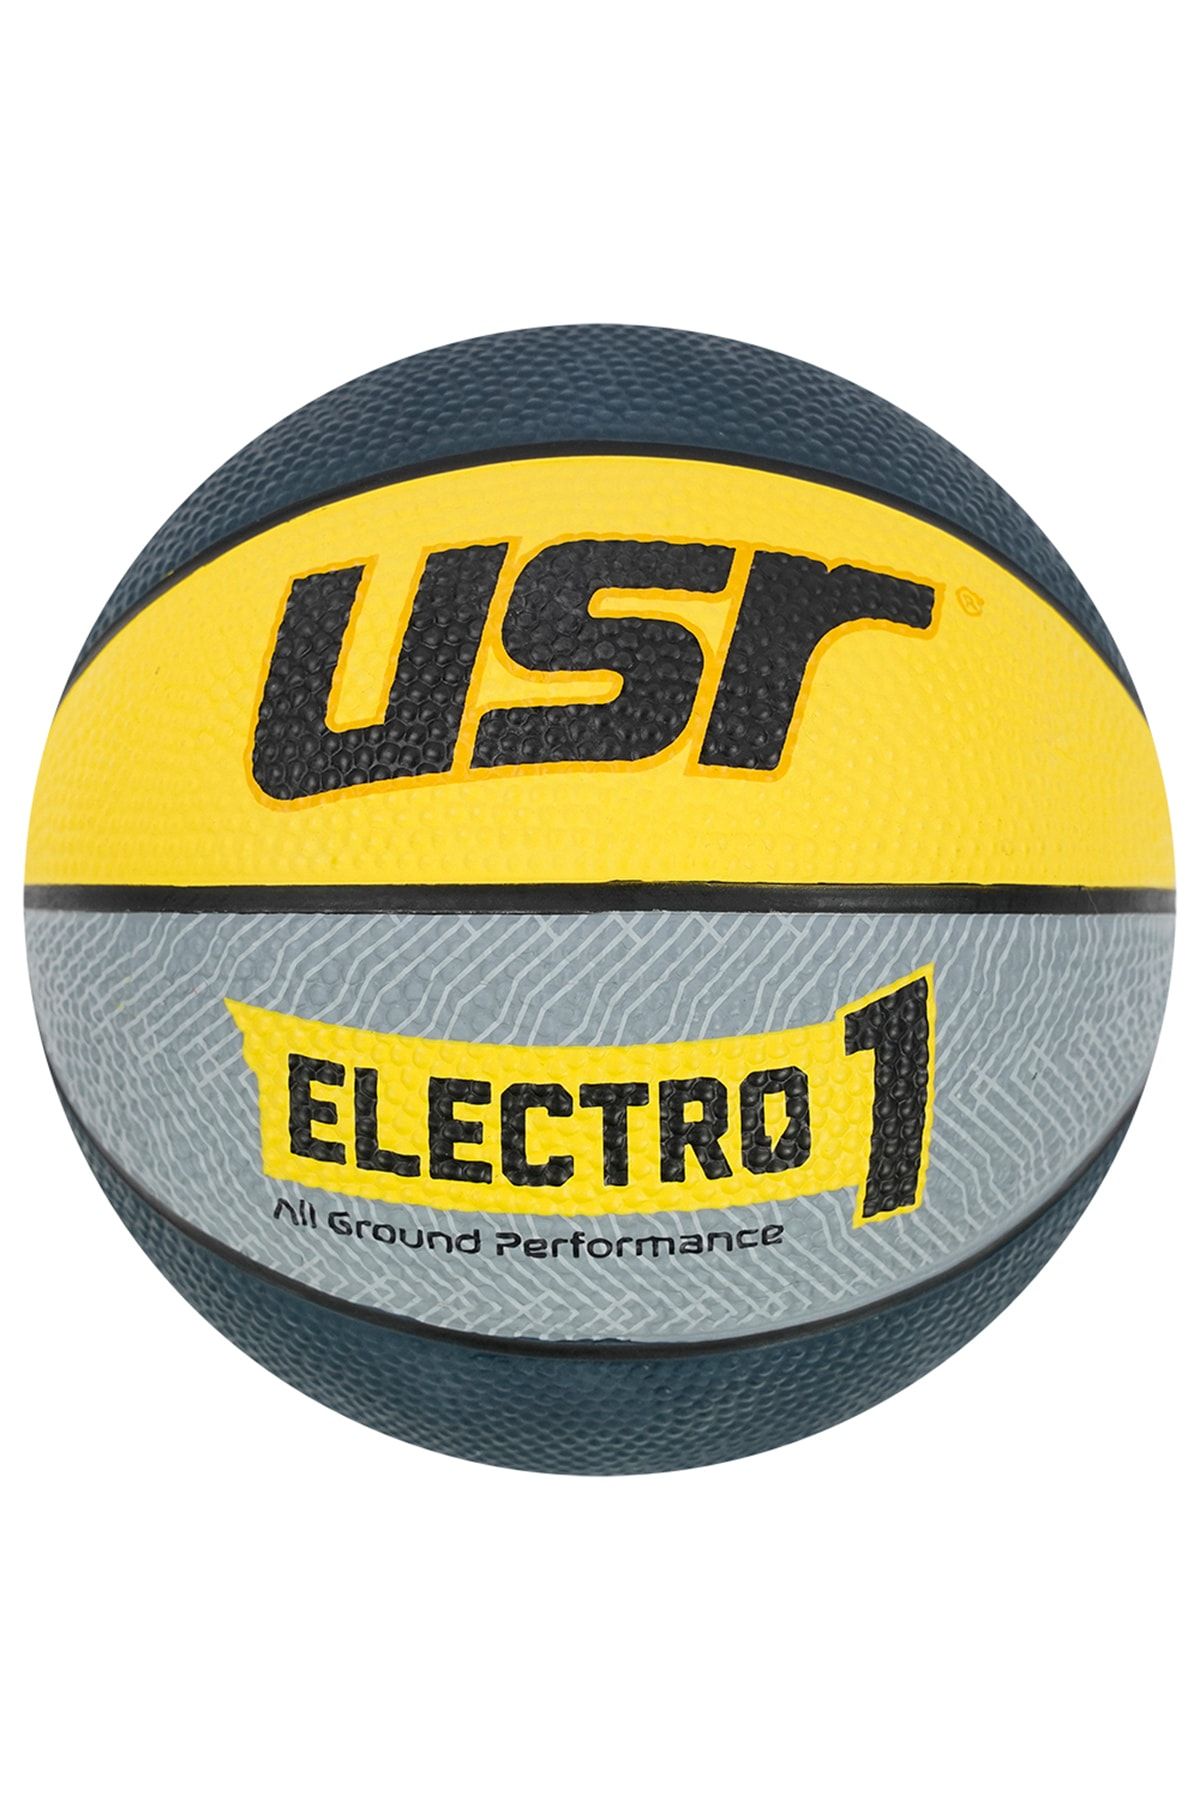 Usr Electro1 Kauçuk 1 No Mini Basketbol Topu